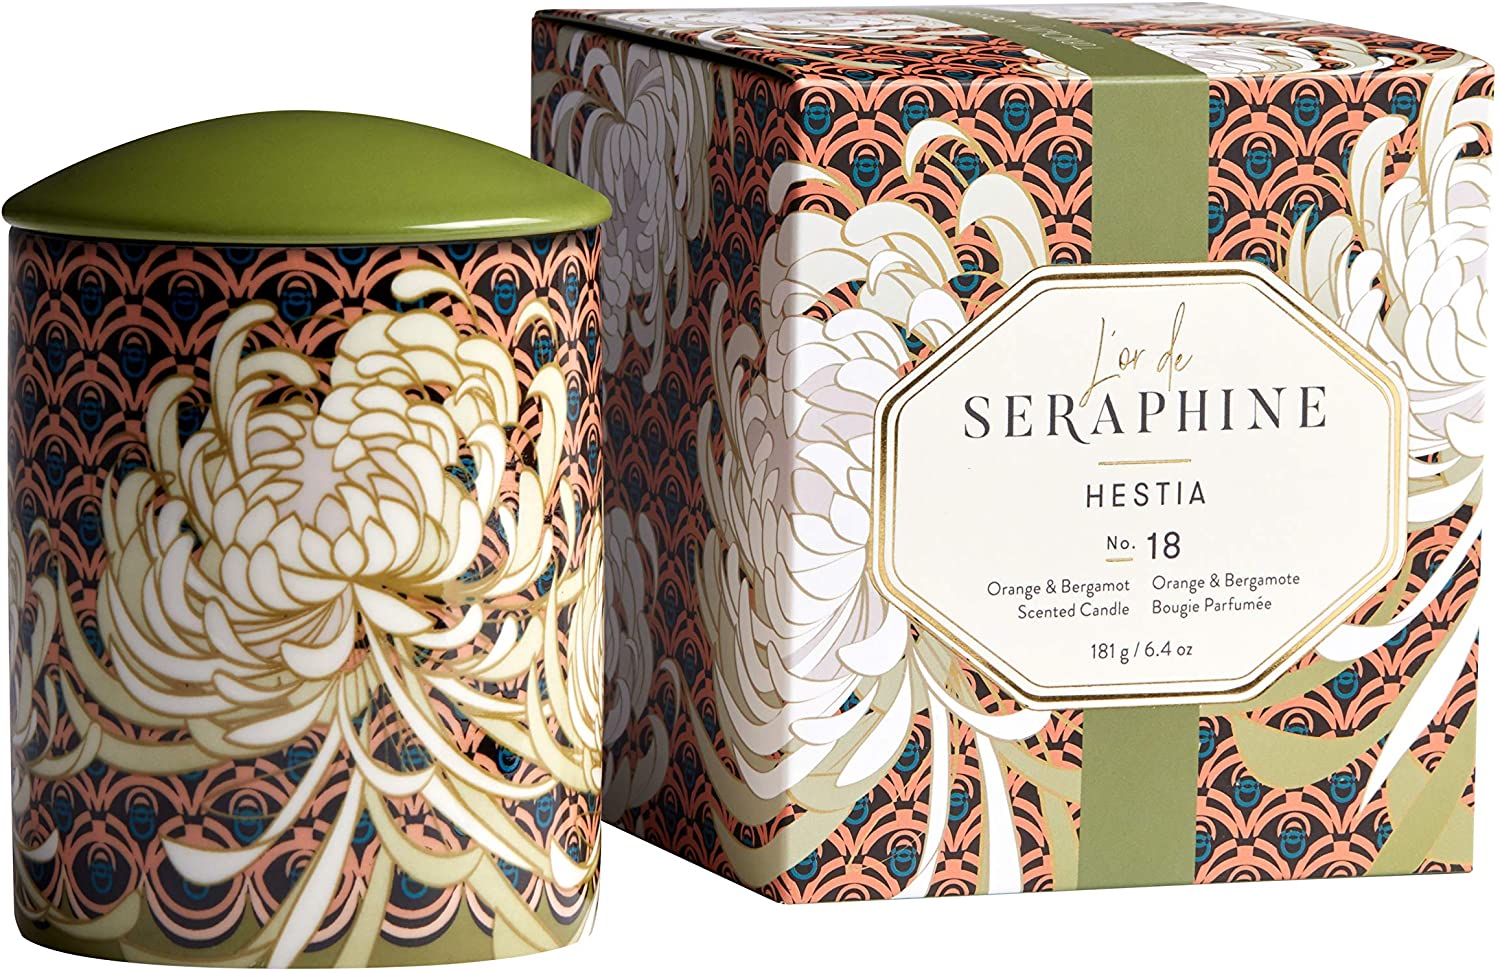 L’or de Seraphine No. 18 Scented Candle Hestia Ceramic Jar